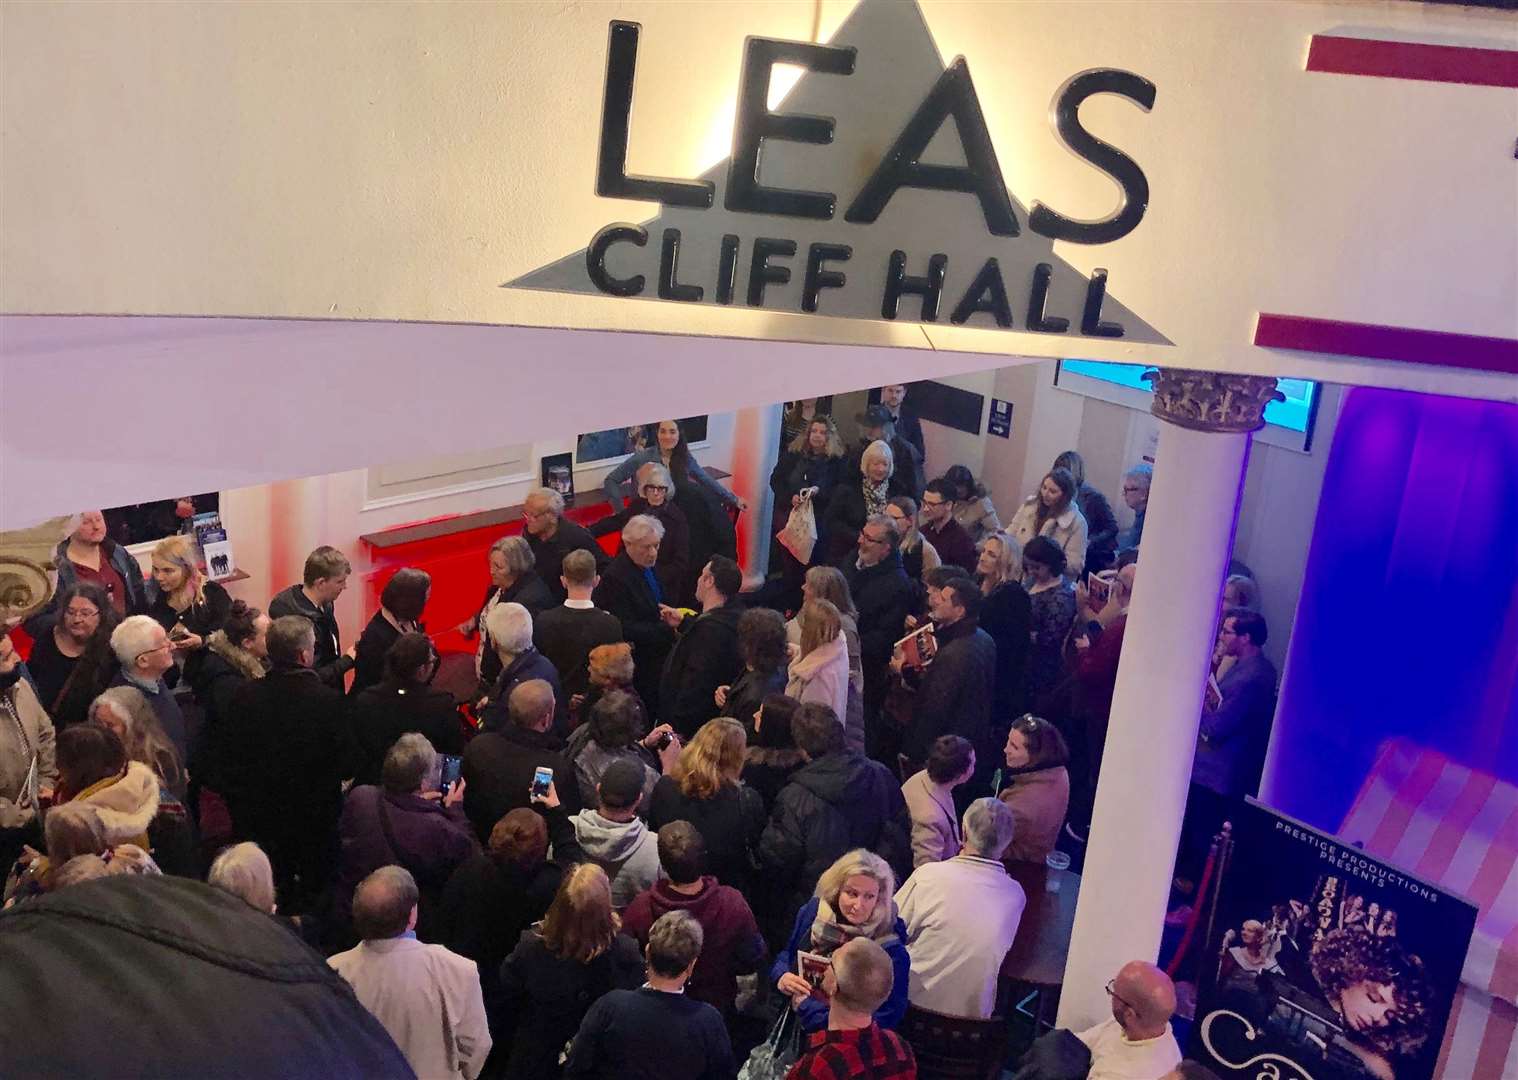 Sir Ian McKellen meets fans in the Leas Cliff Hall foyer (8251907)